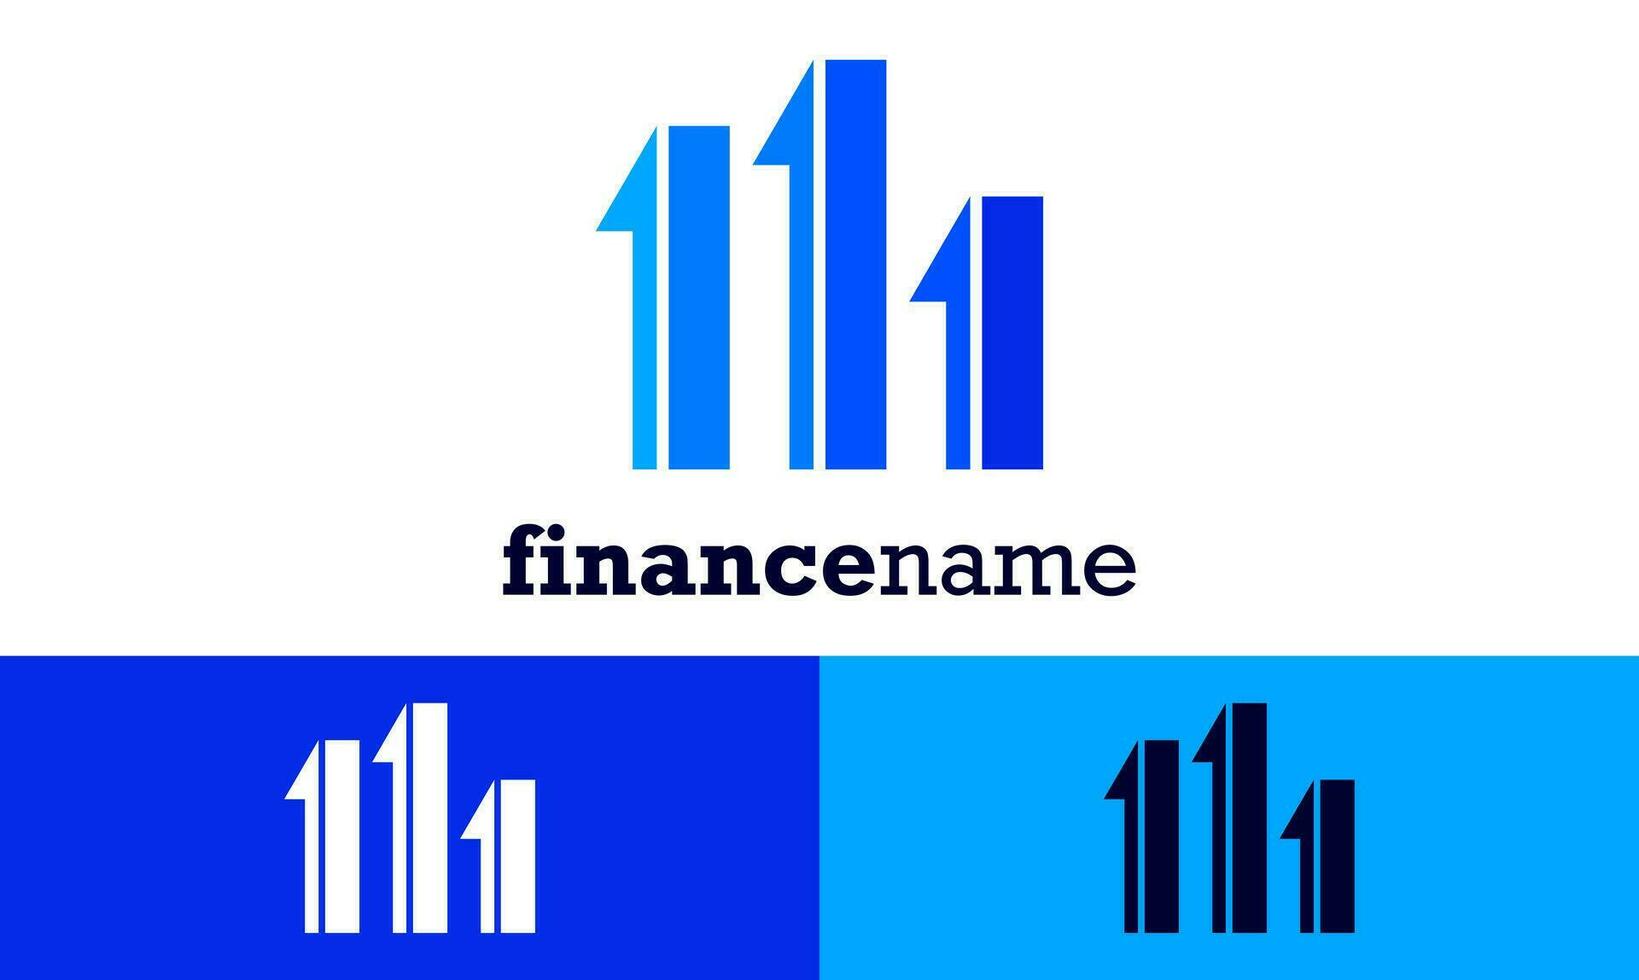 einfach Illustration Logo Design zum finanziell Unternehmen. finanziell Unternehmen Logo Design im Blau Farbe. vektor